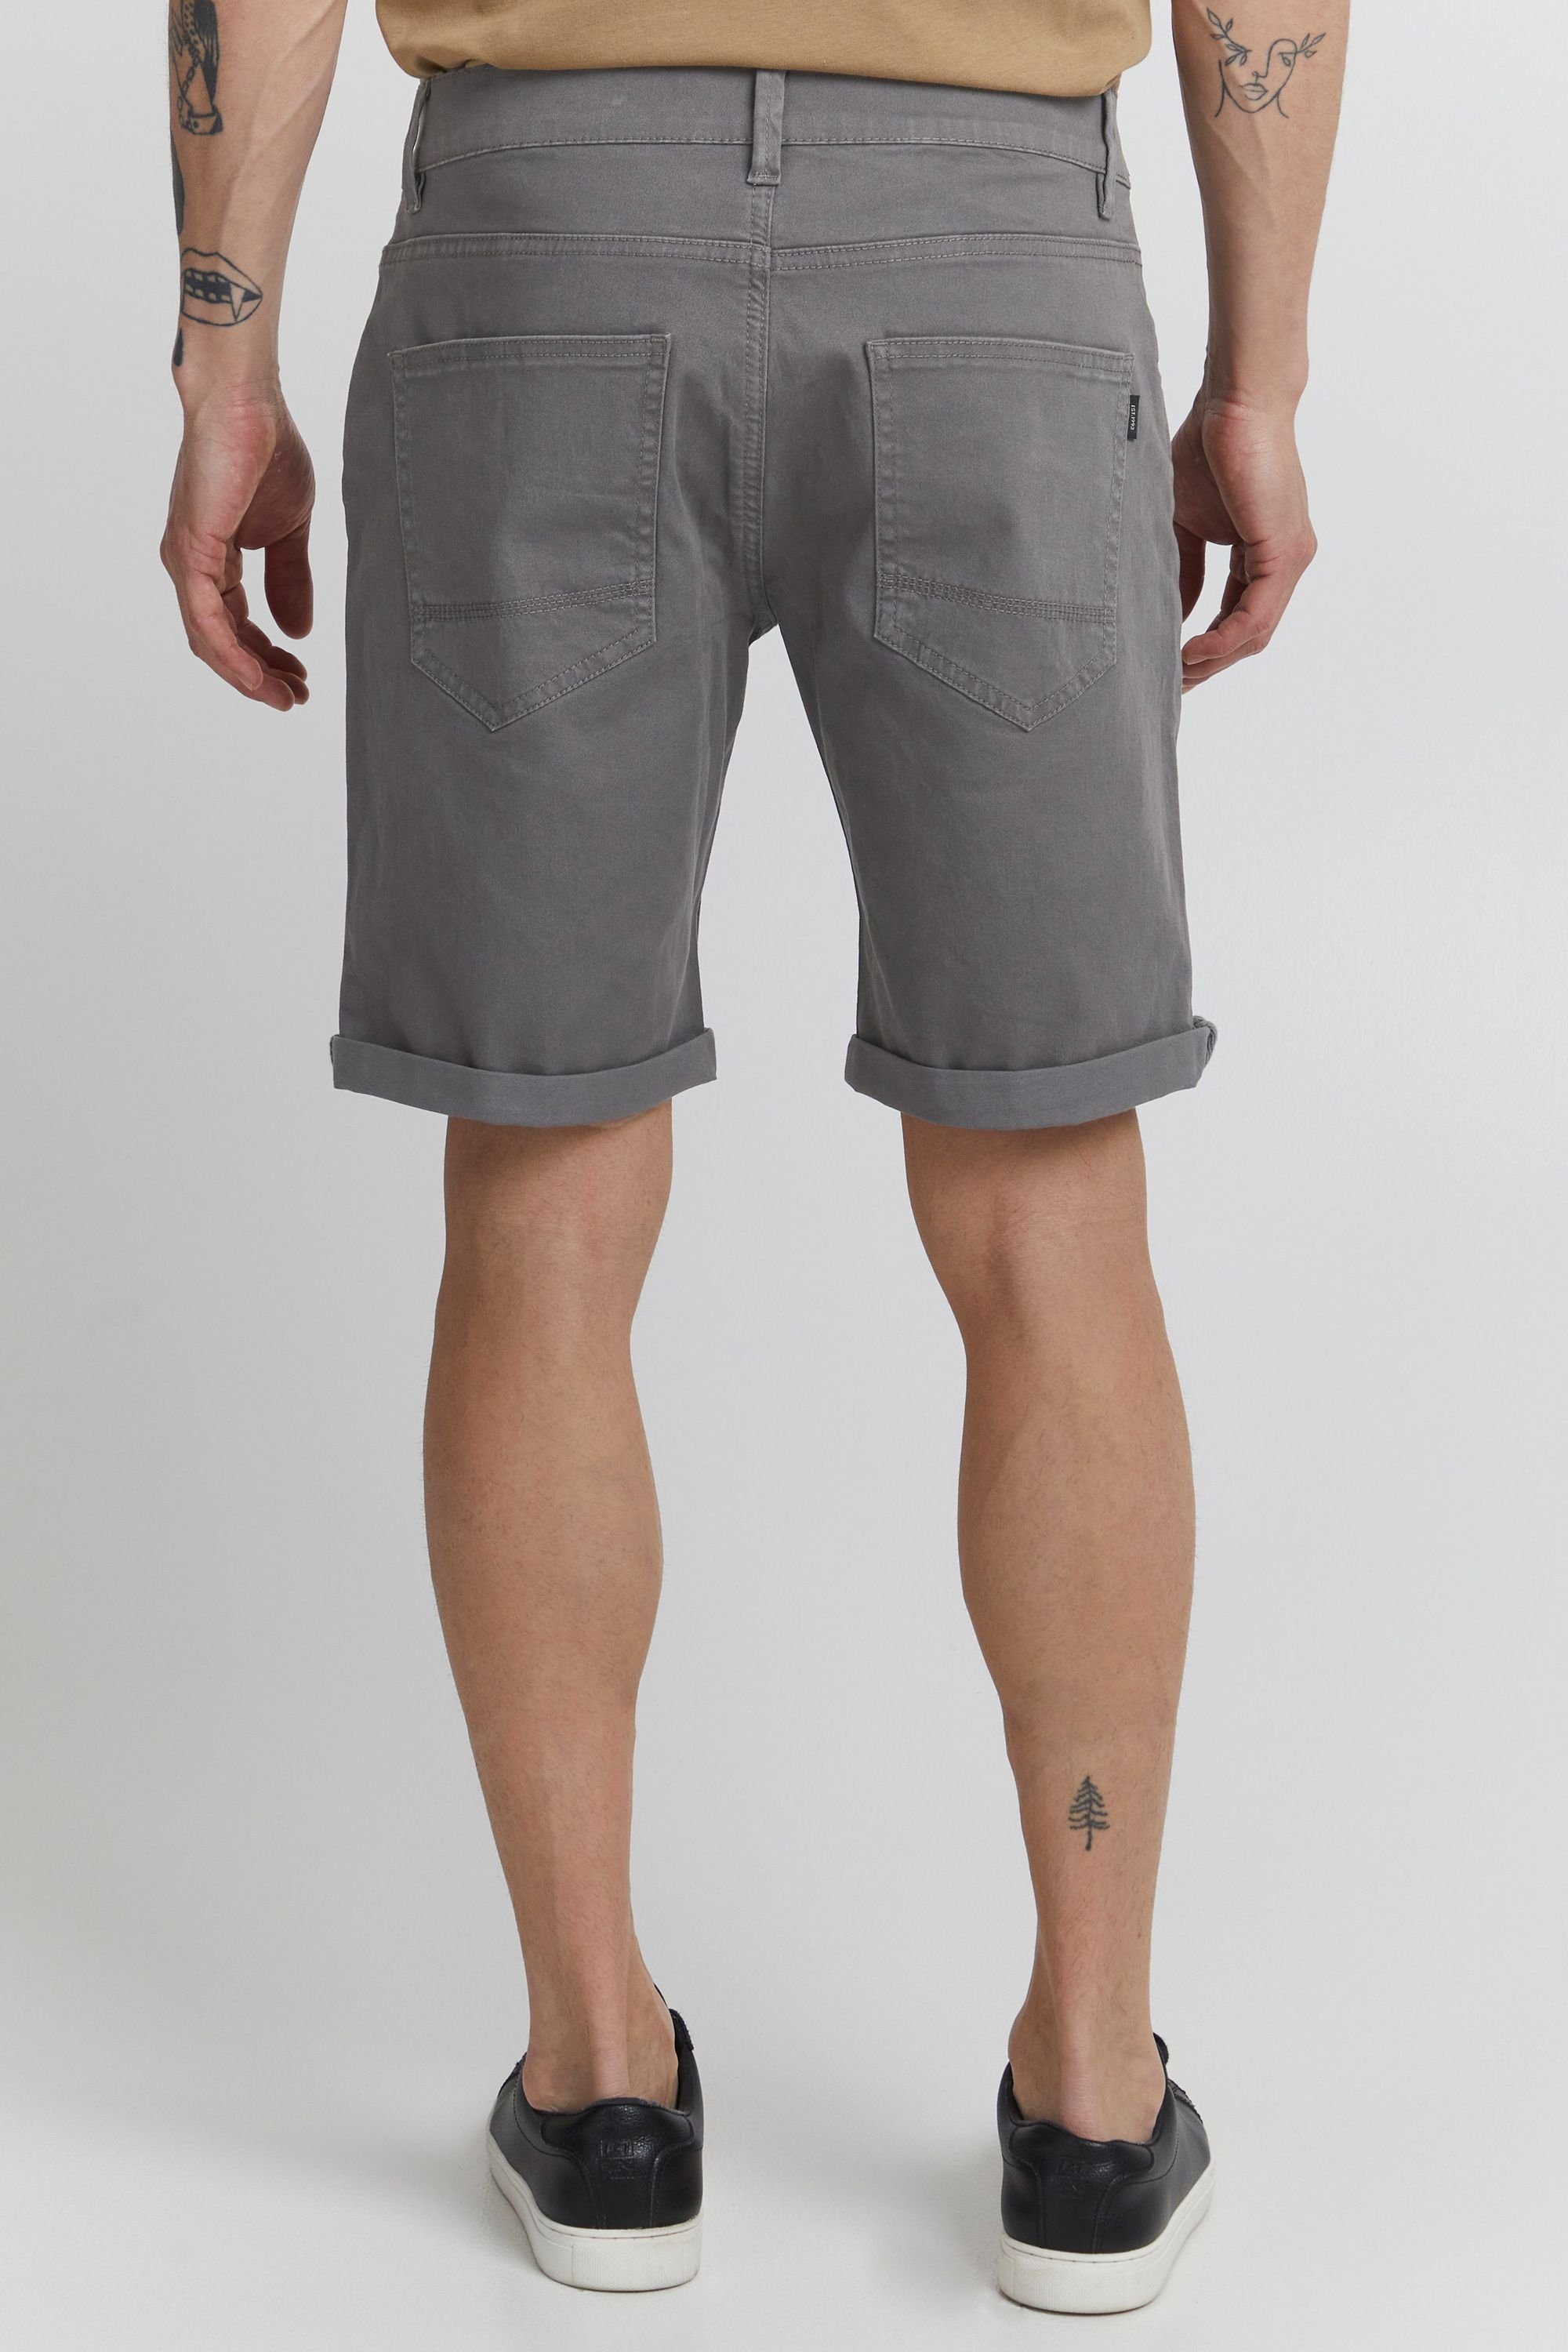 Indicode Shorts IDPokka Grey (905)